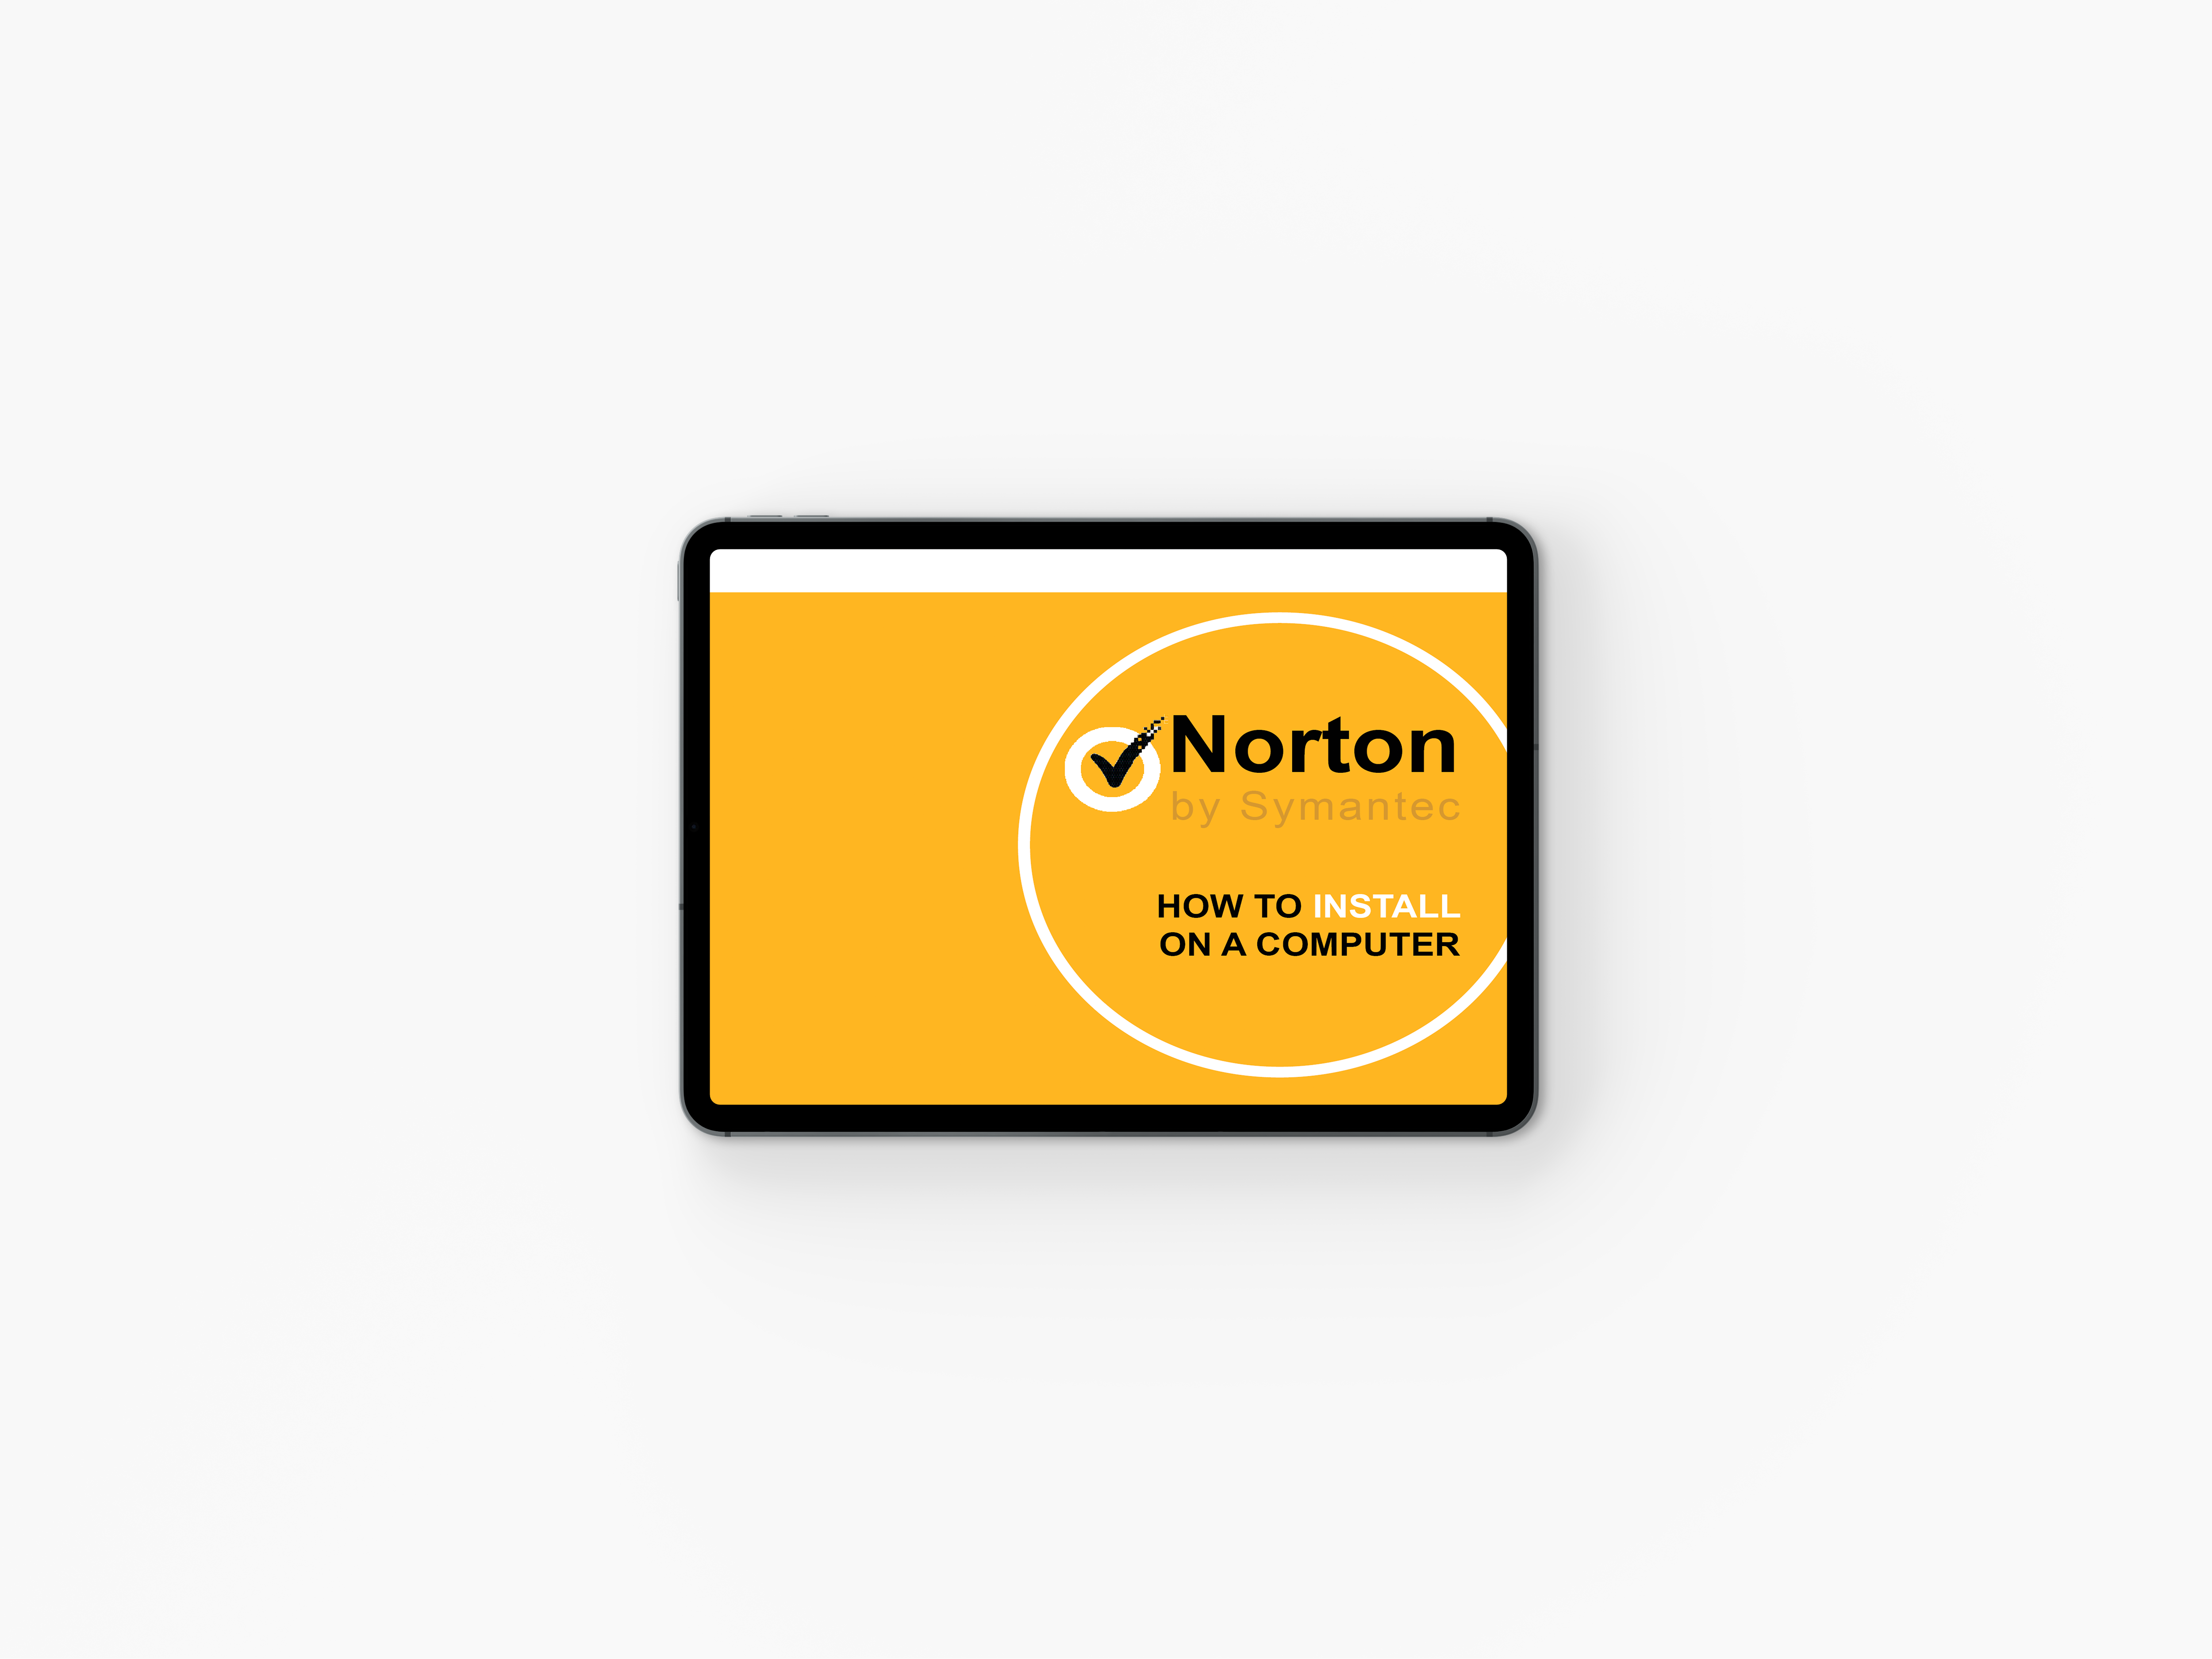 This a the E-Pub version of the Norton Manual